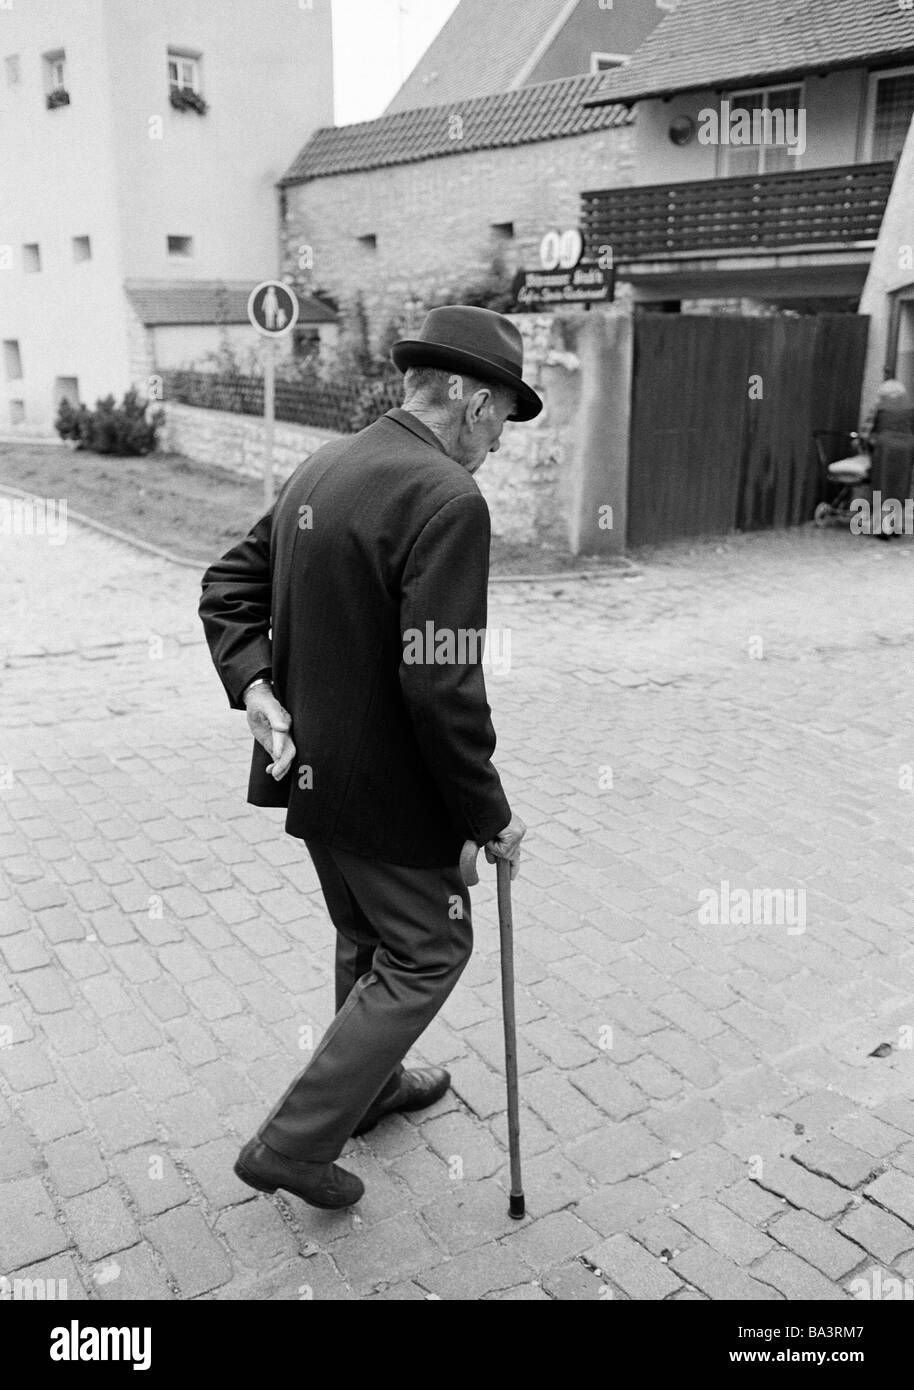 Eighties, black and white photo, people, elder people, older man walking, walking stick, jacket, trousers, hat, aged 70 to 80 years Stock Photo